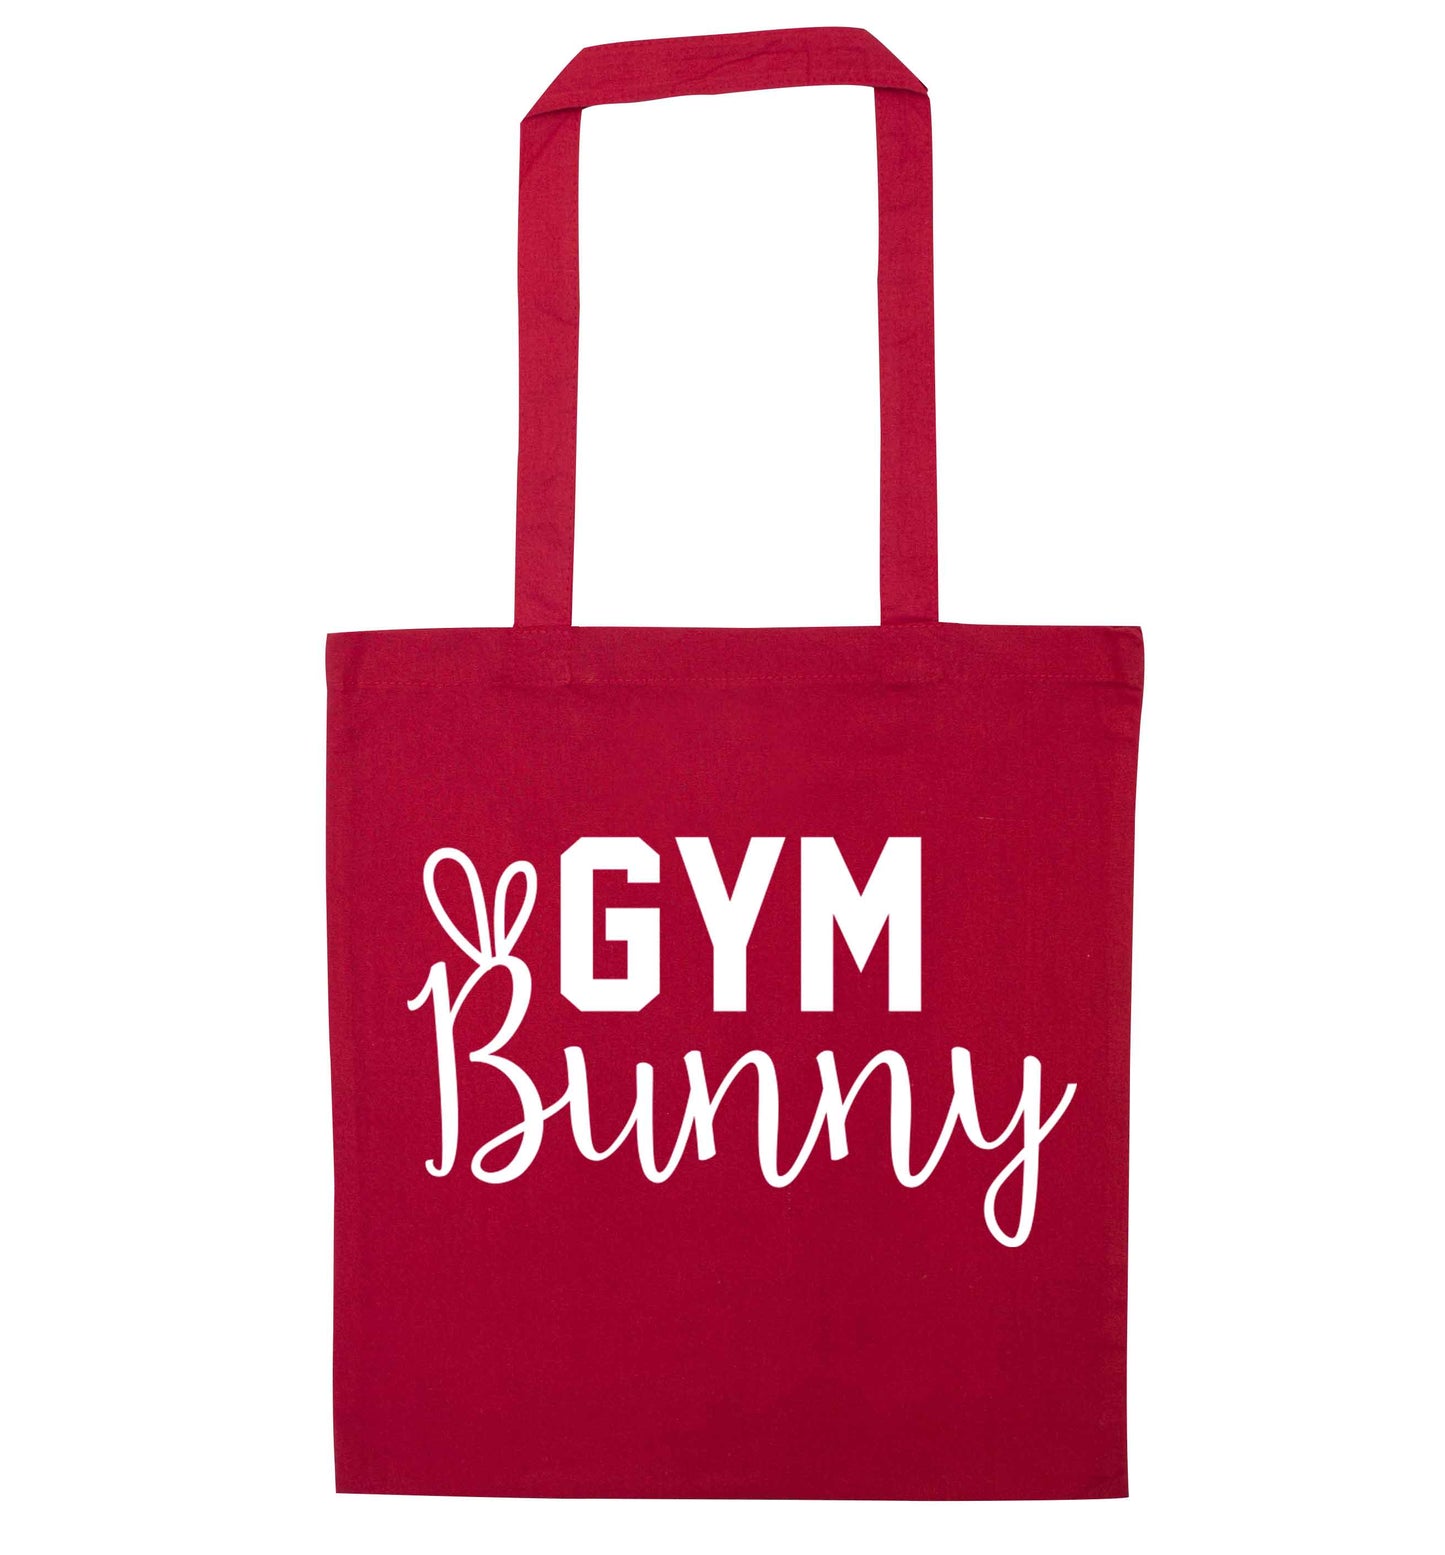 gym bunny red tote bag